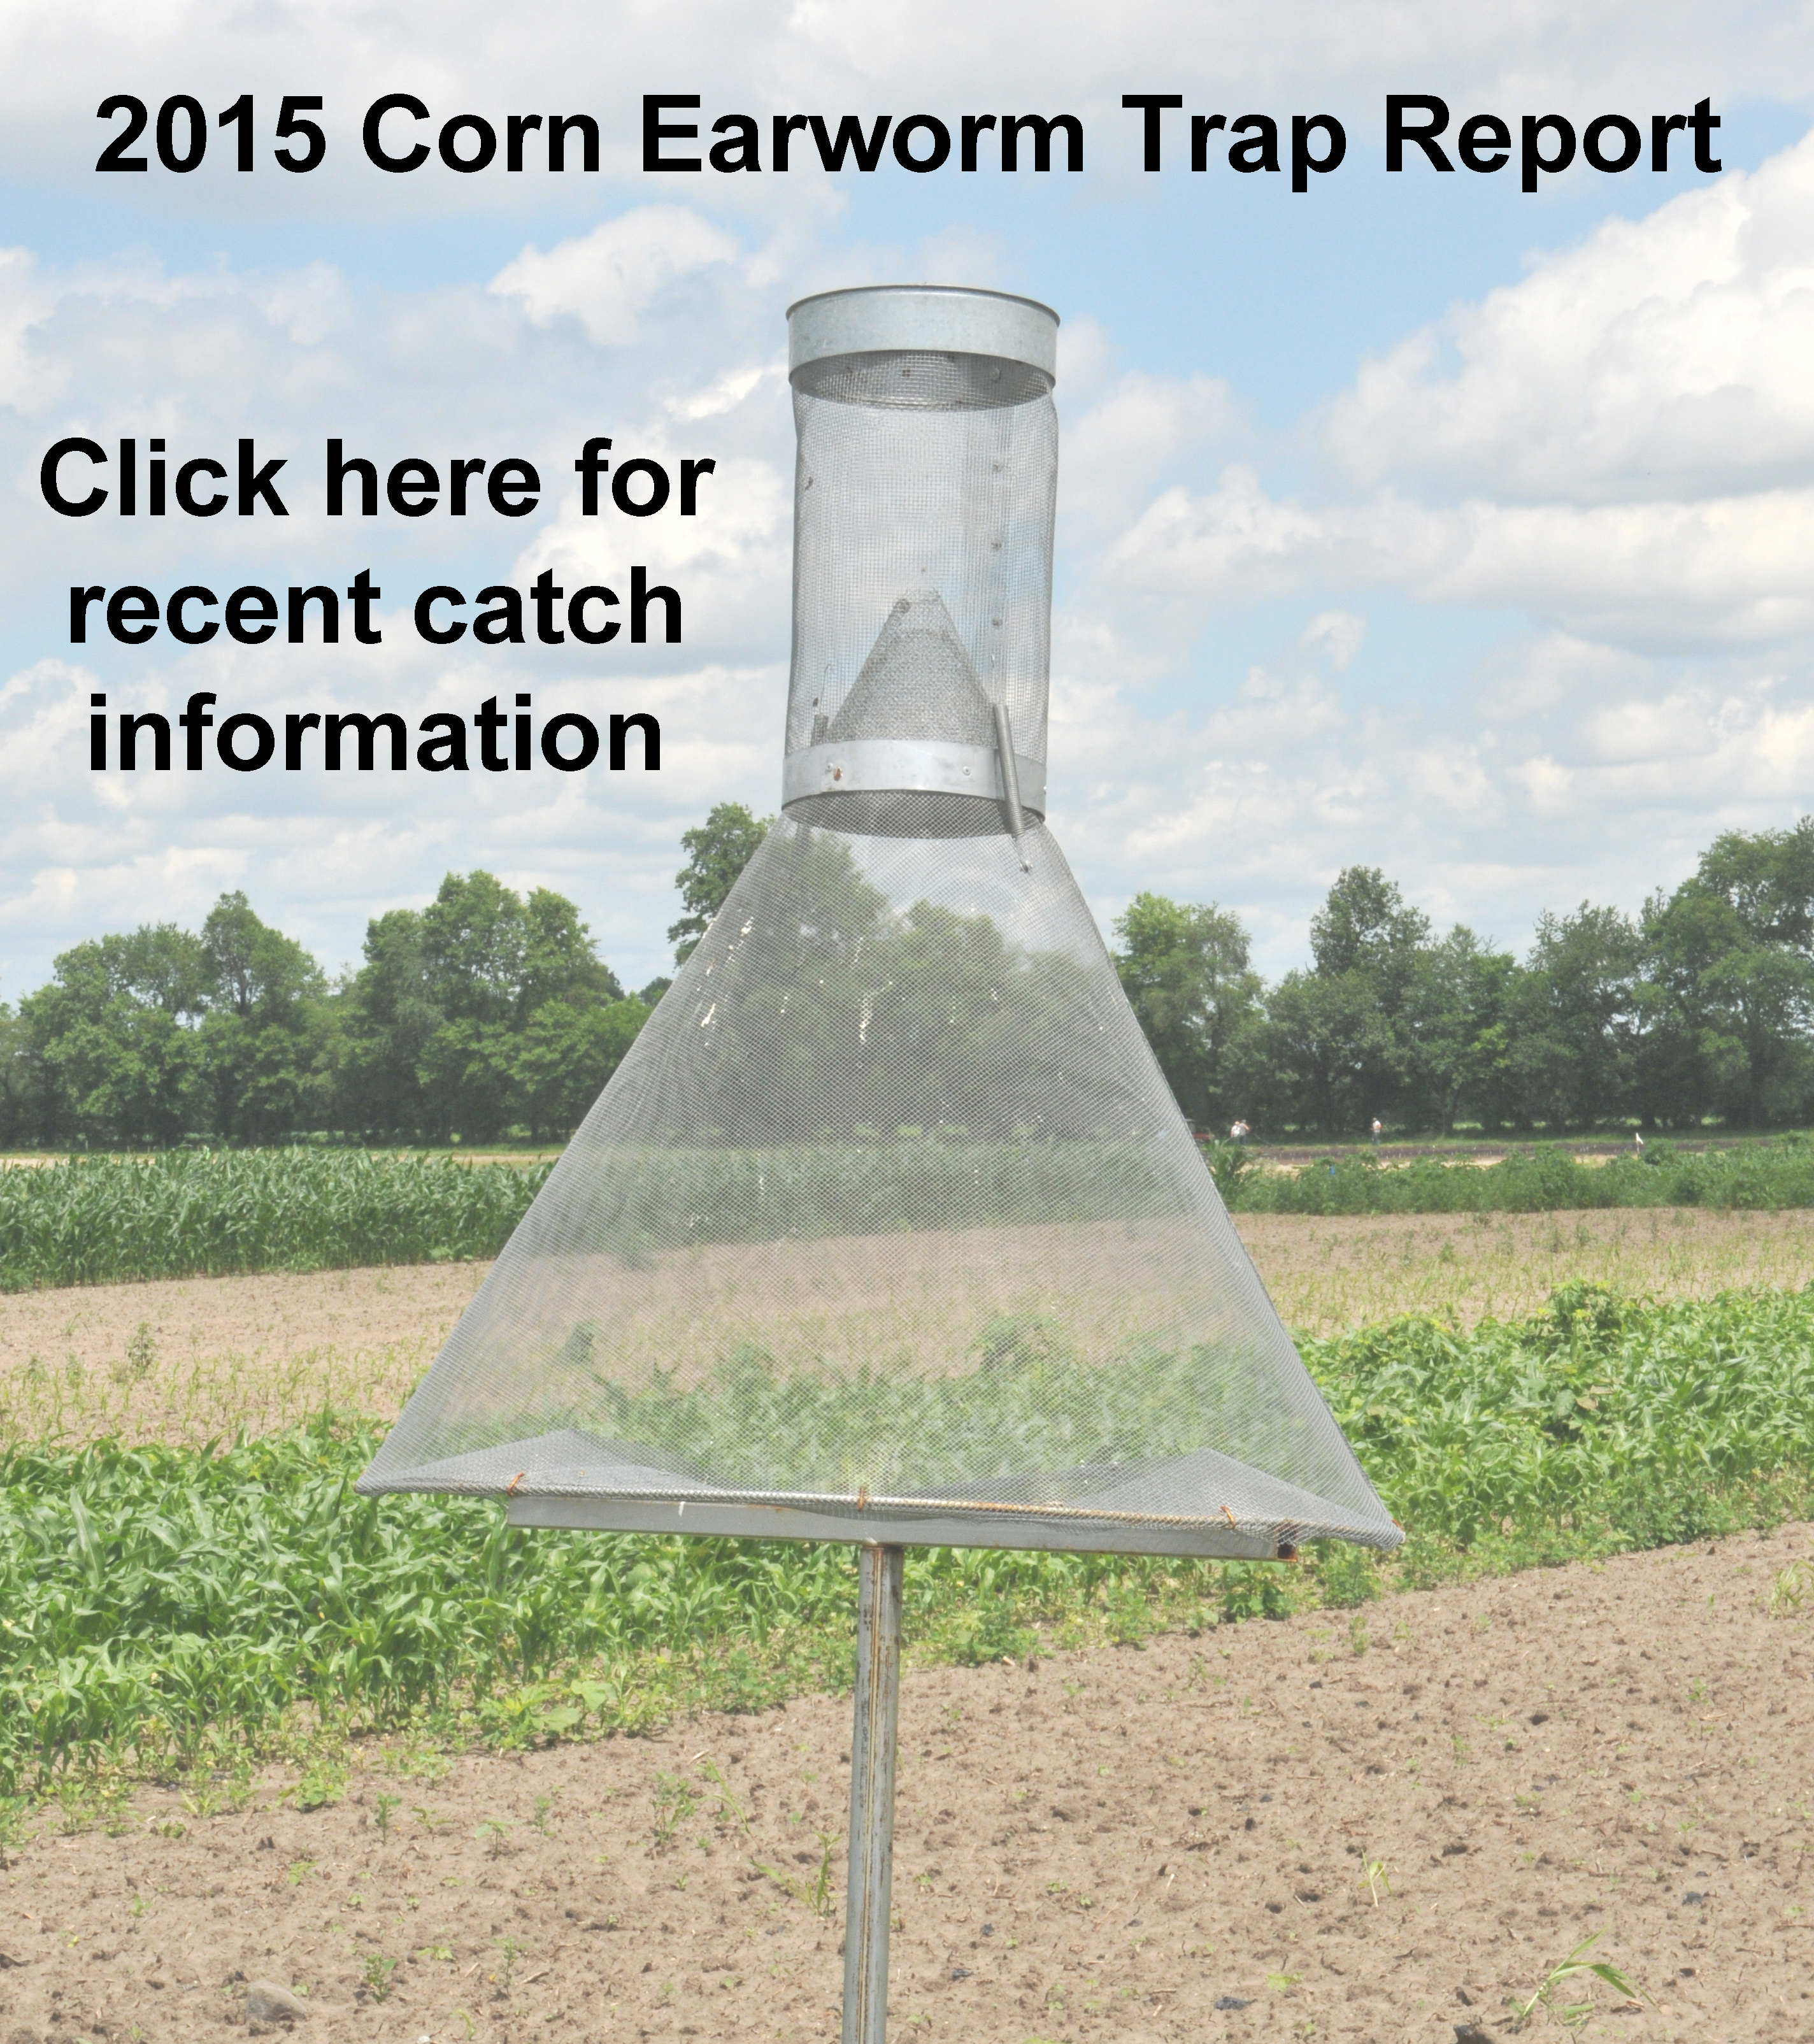 Corn Earworm Trap Report.